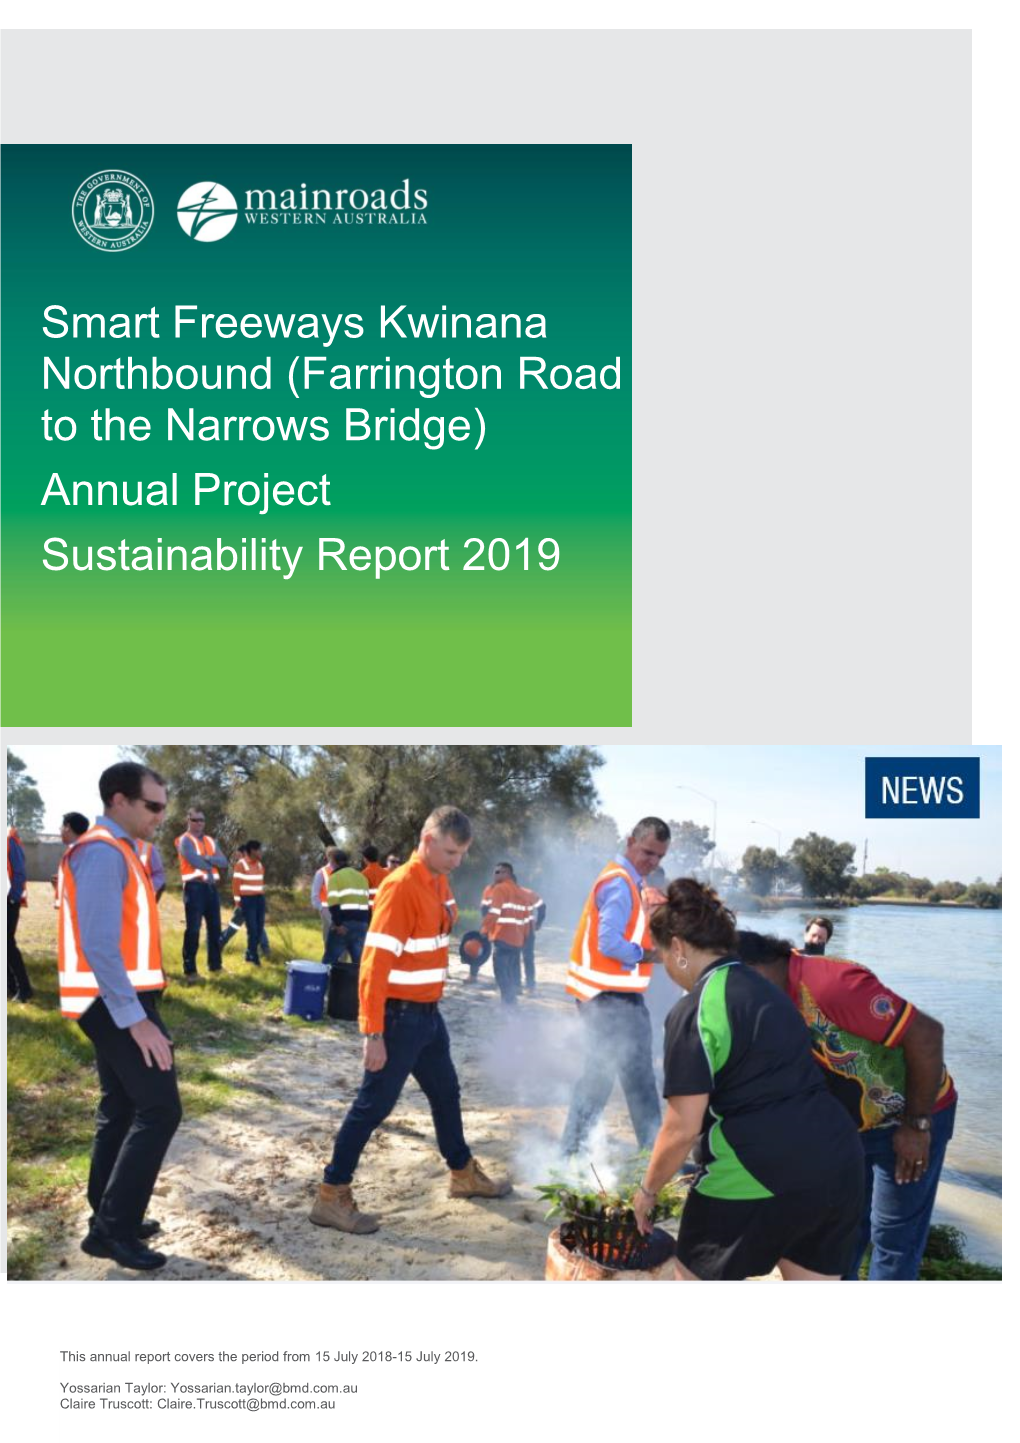 Smart Freeways Kwinana Northbound (Farrington Road to the Narrows Bridge) Annual Project Sustainability Report 2019